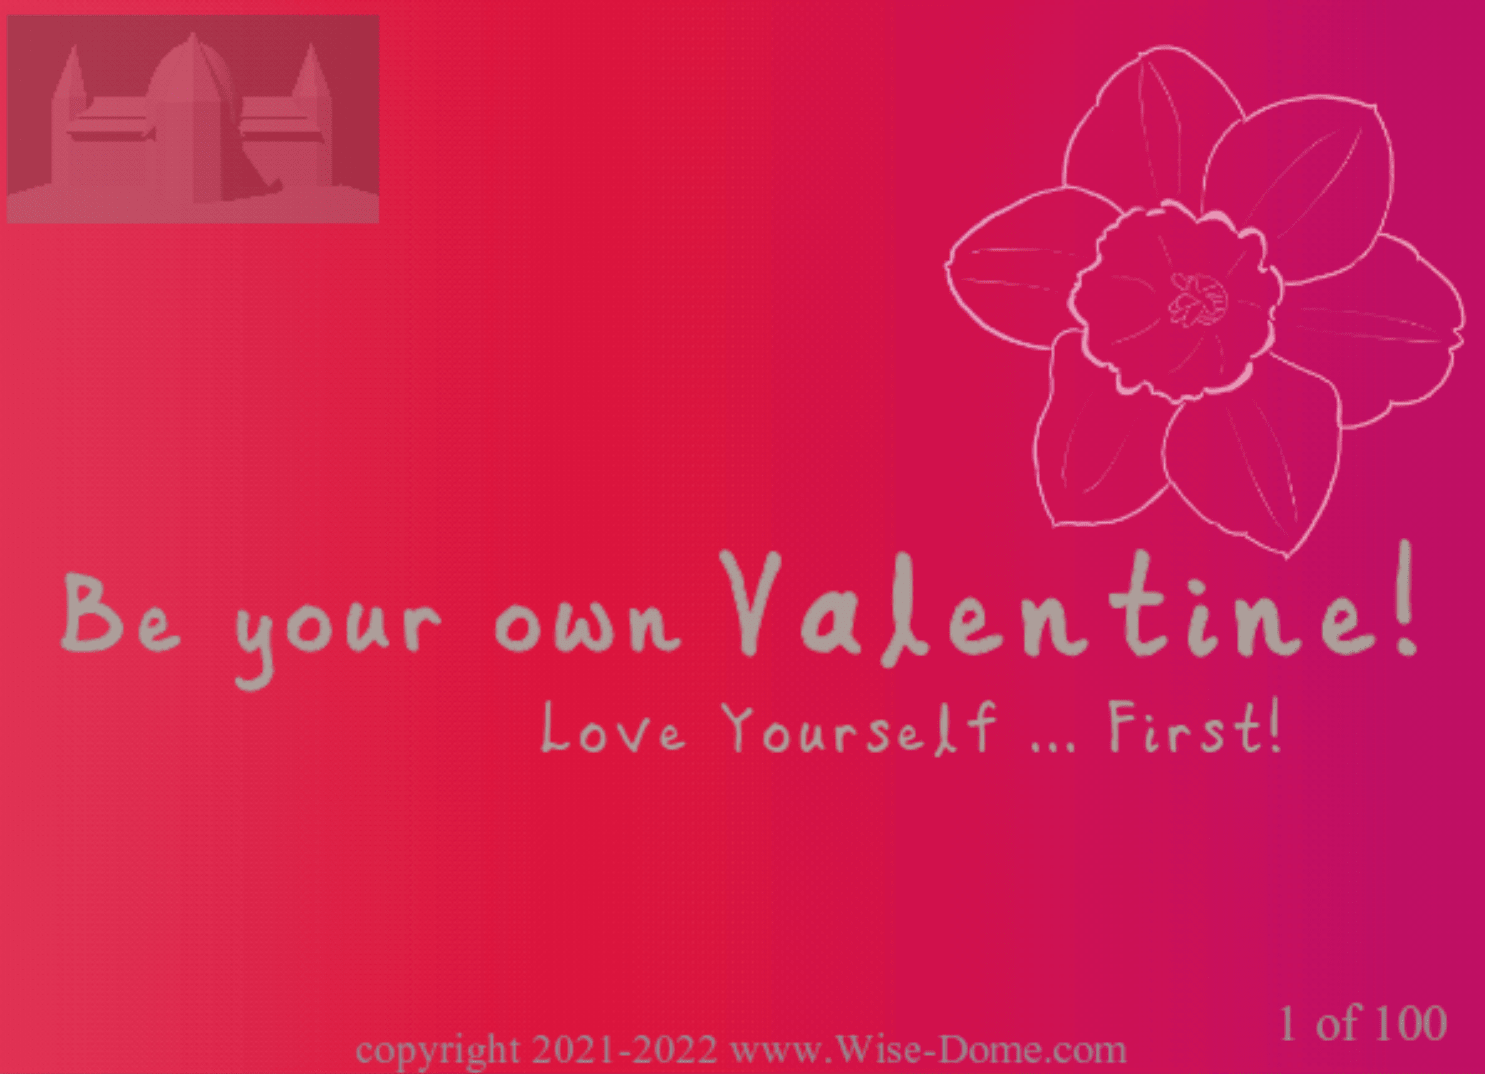 Valentines00002 - Be your own Valentine!